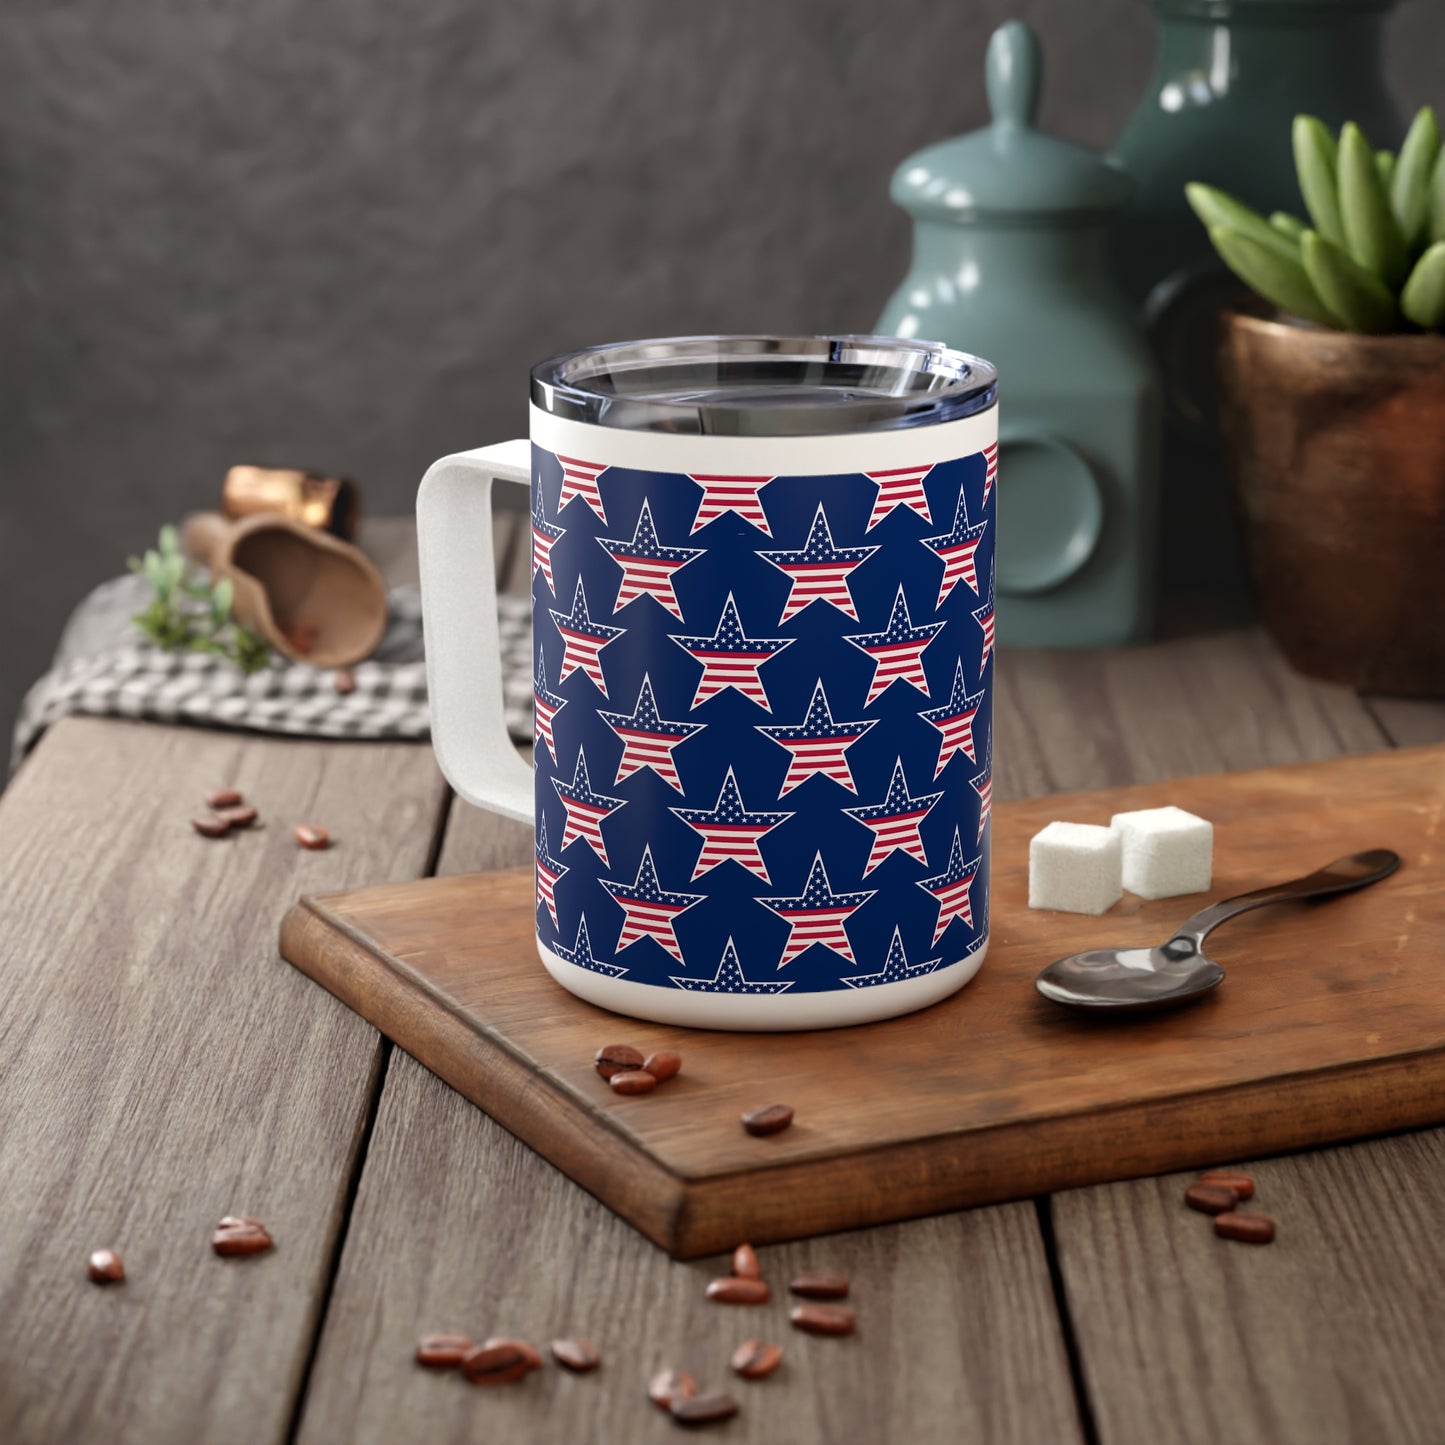 American Stars Insulated Coffee Mug, 10oz